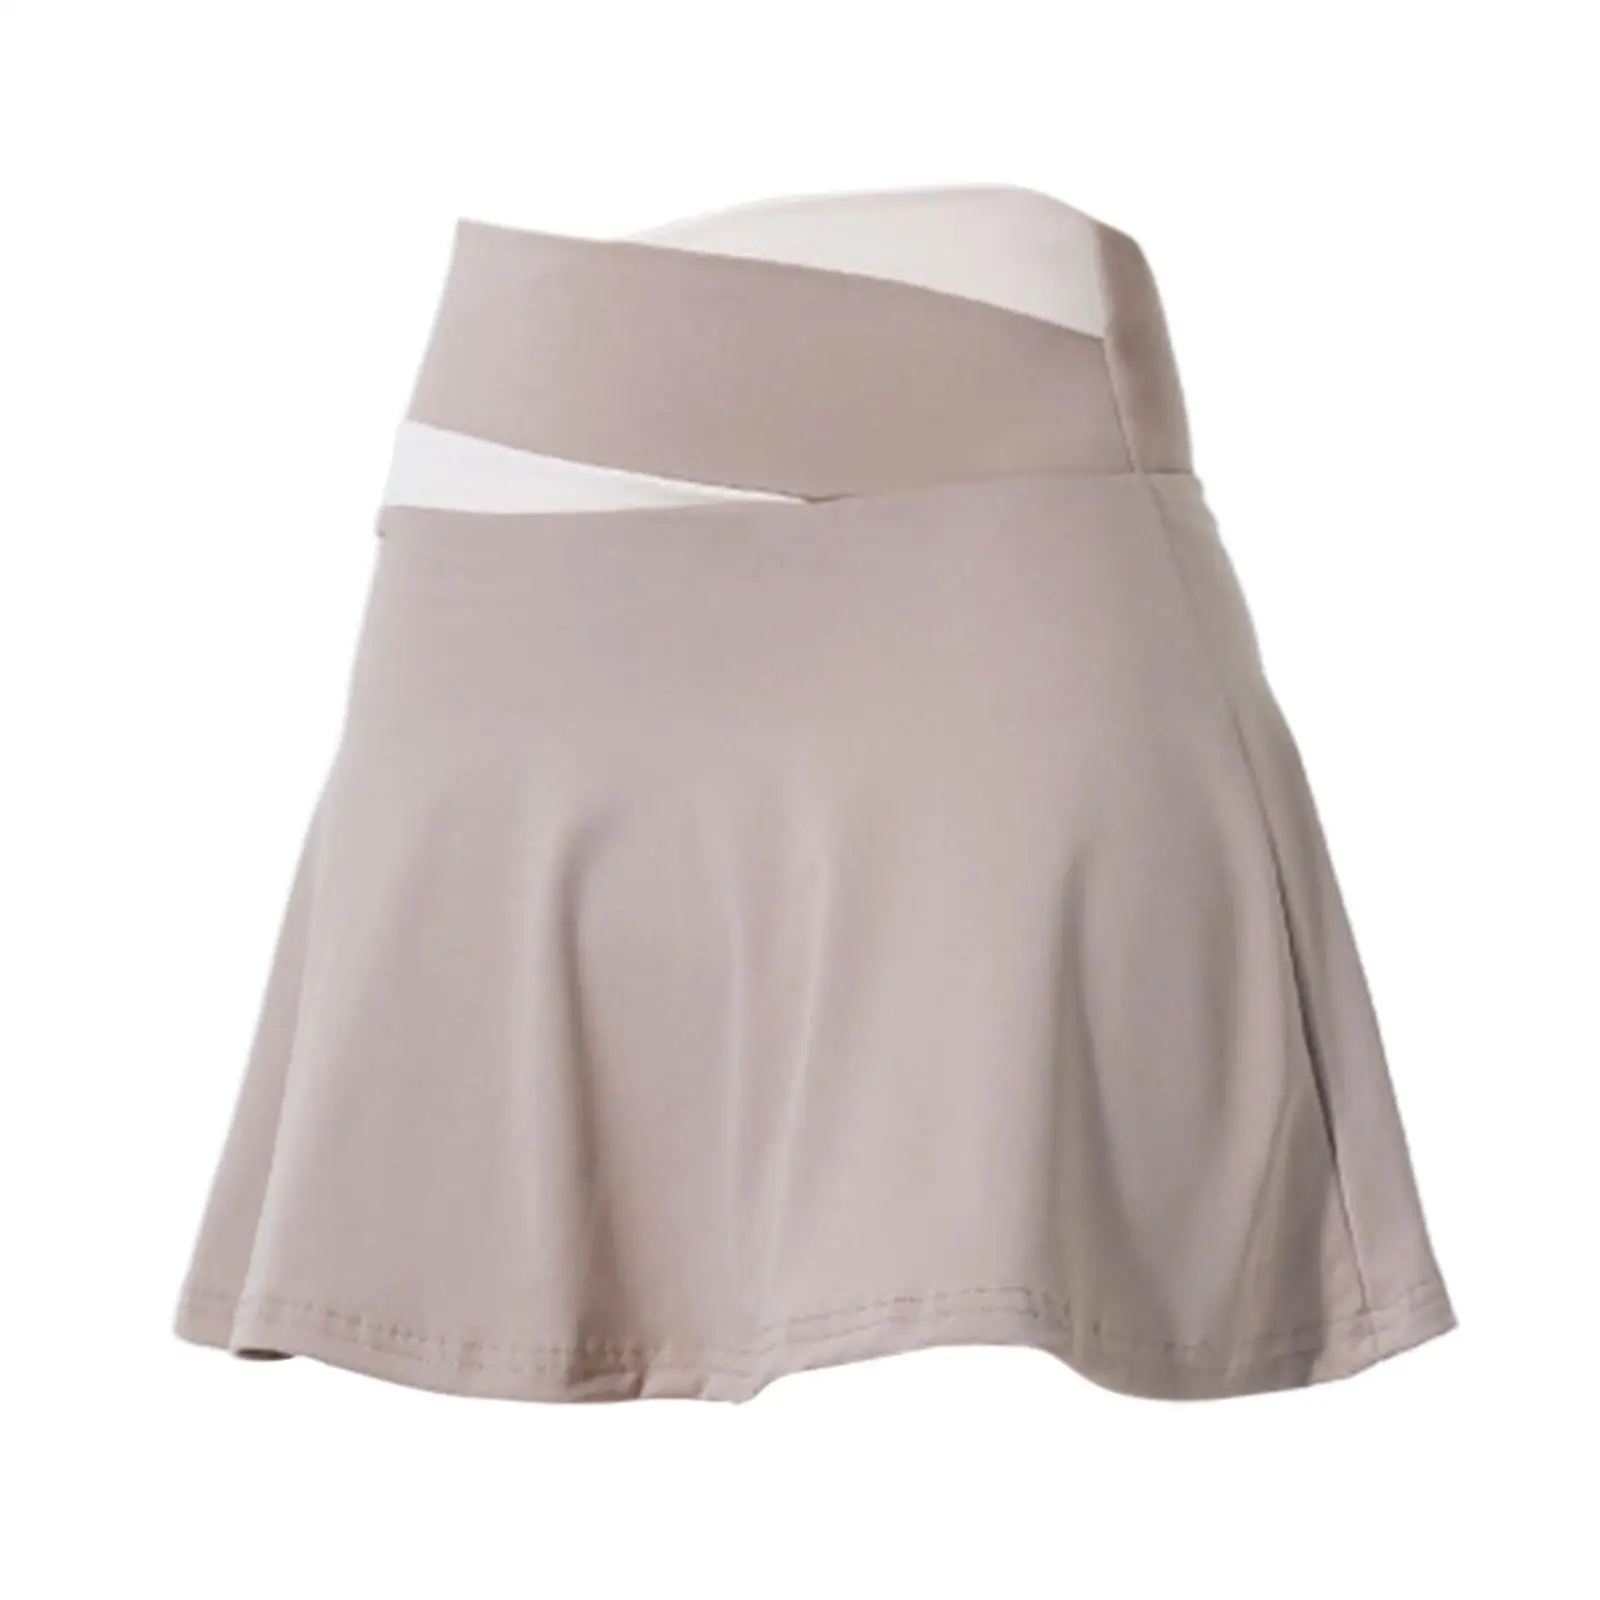 Tennis Skirt Short Skirts Gymwear High Waisted Anti Exposure Athletic Clothing Badminton Skirts for Golf Yoga Workout Sport